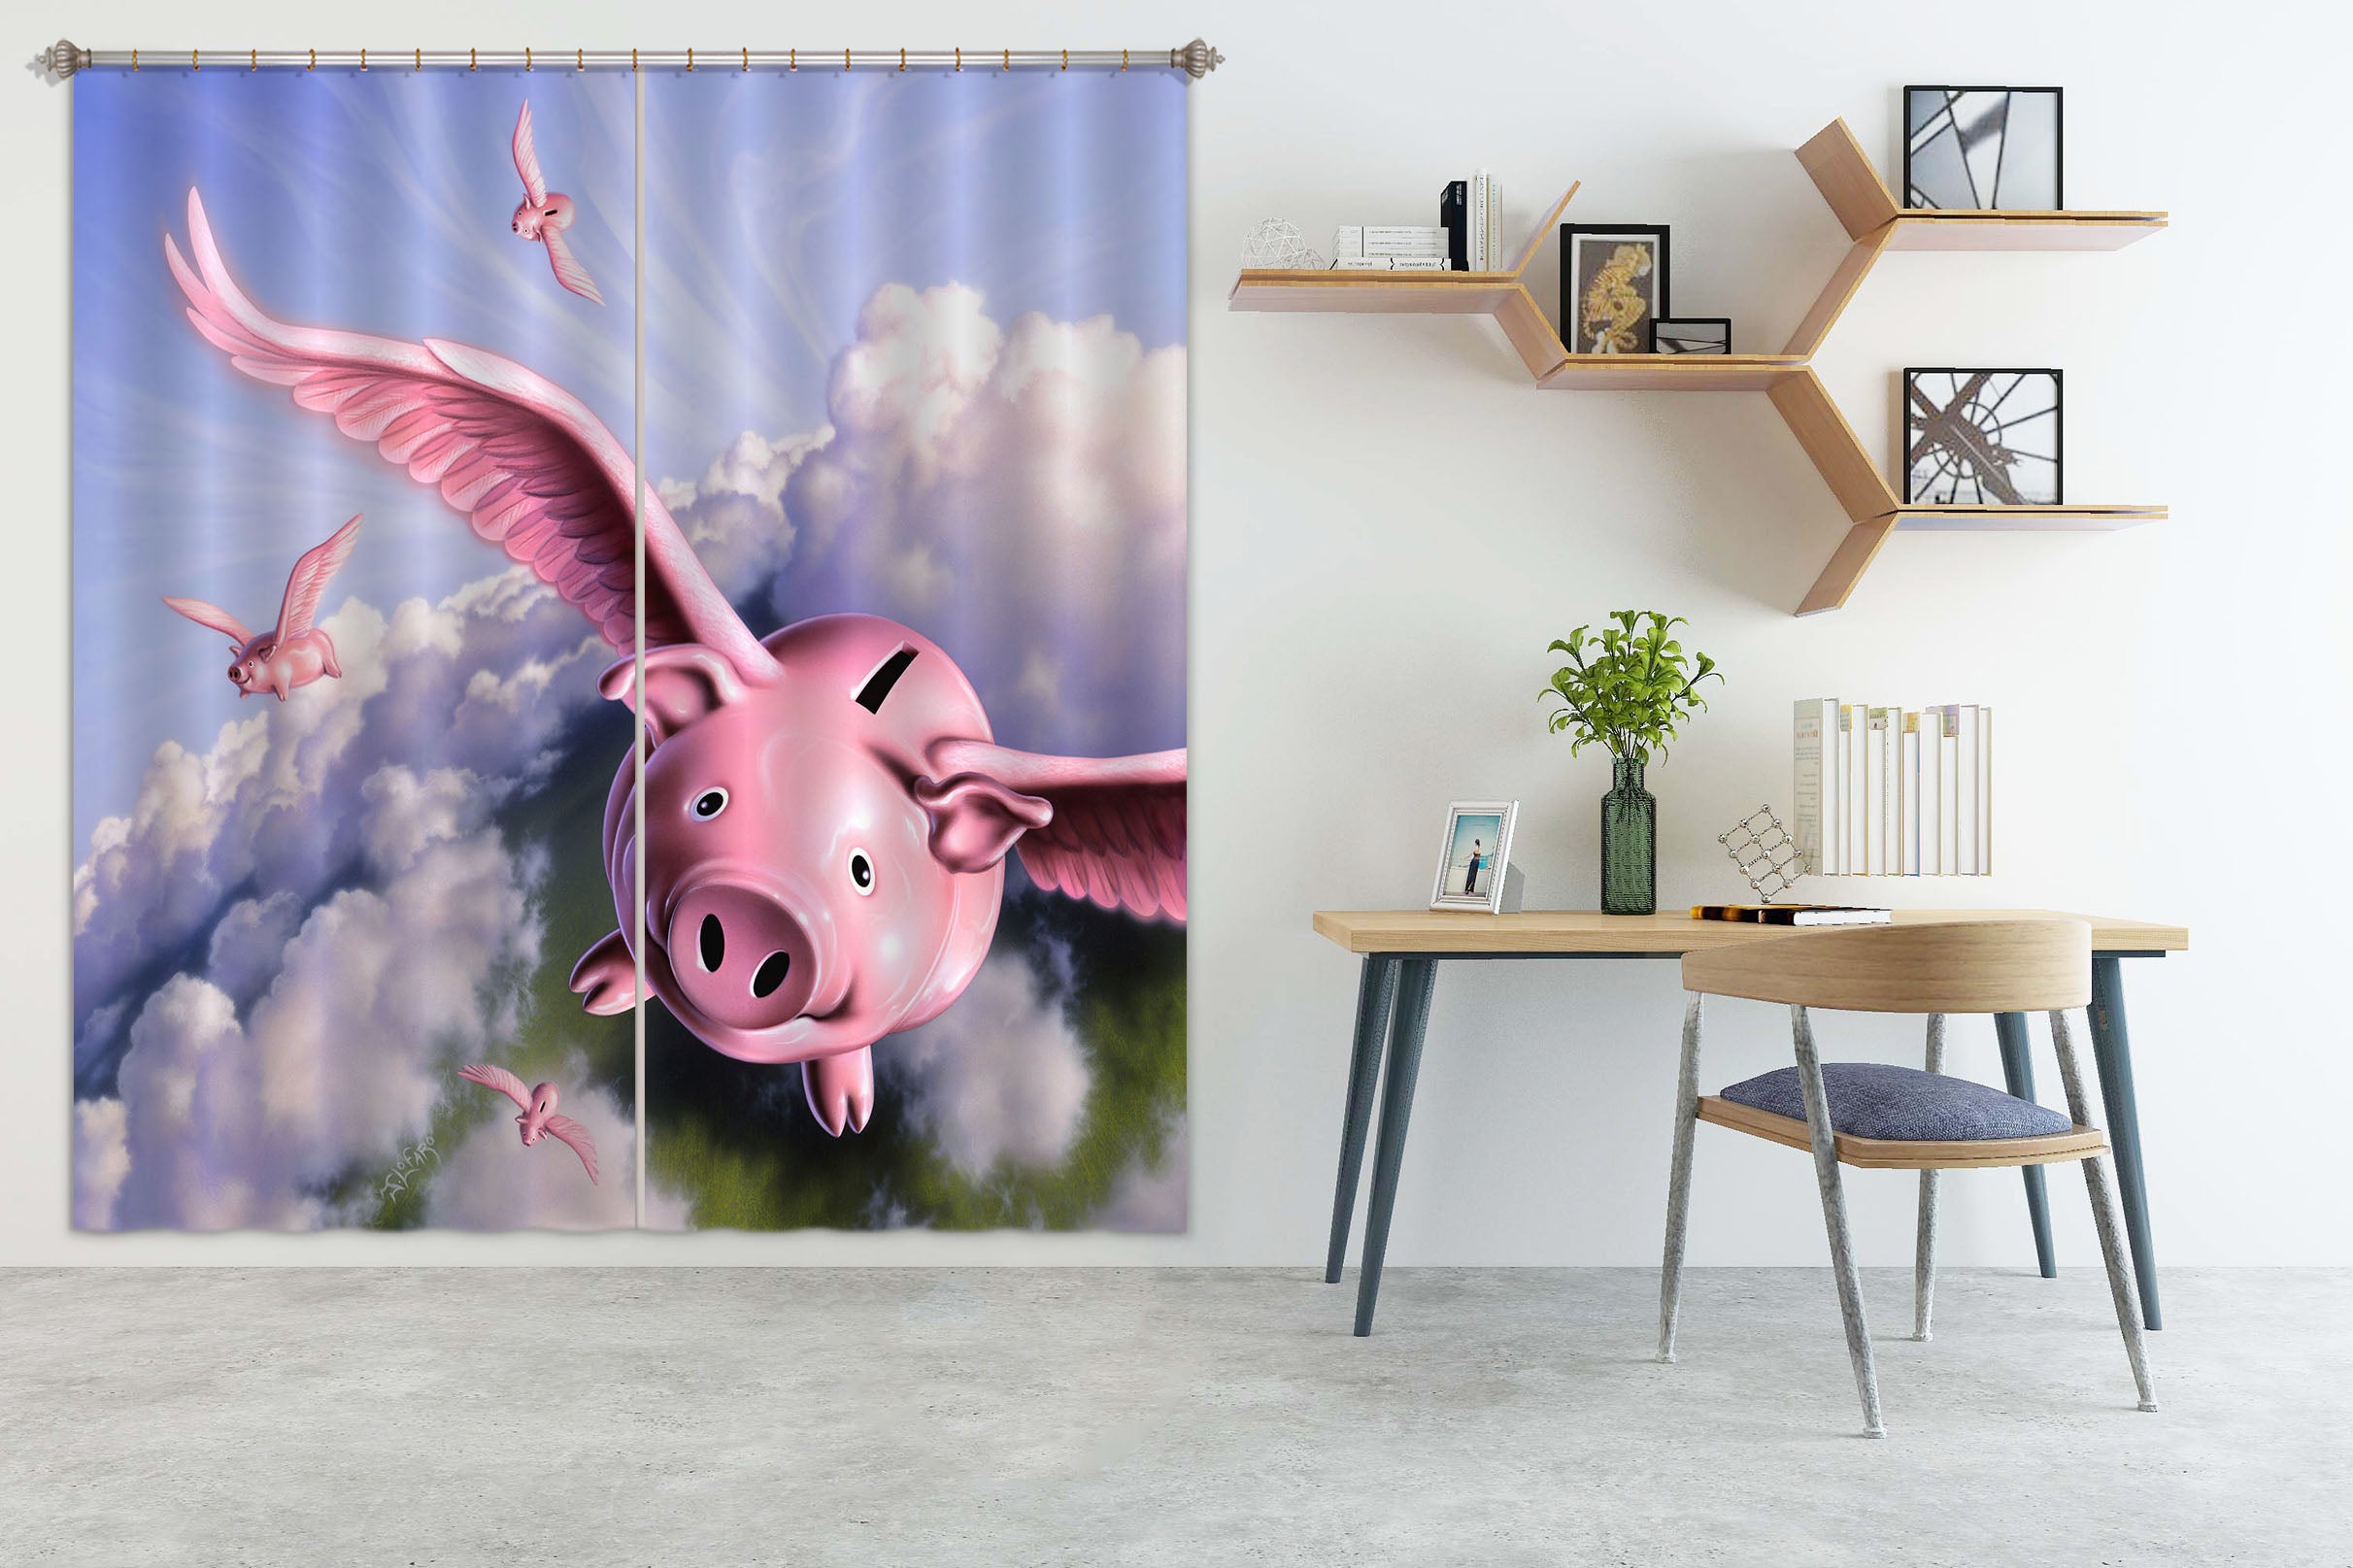 3D Flying Pig 072 Jerry LoFaro Curtain Curtains Drapes